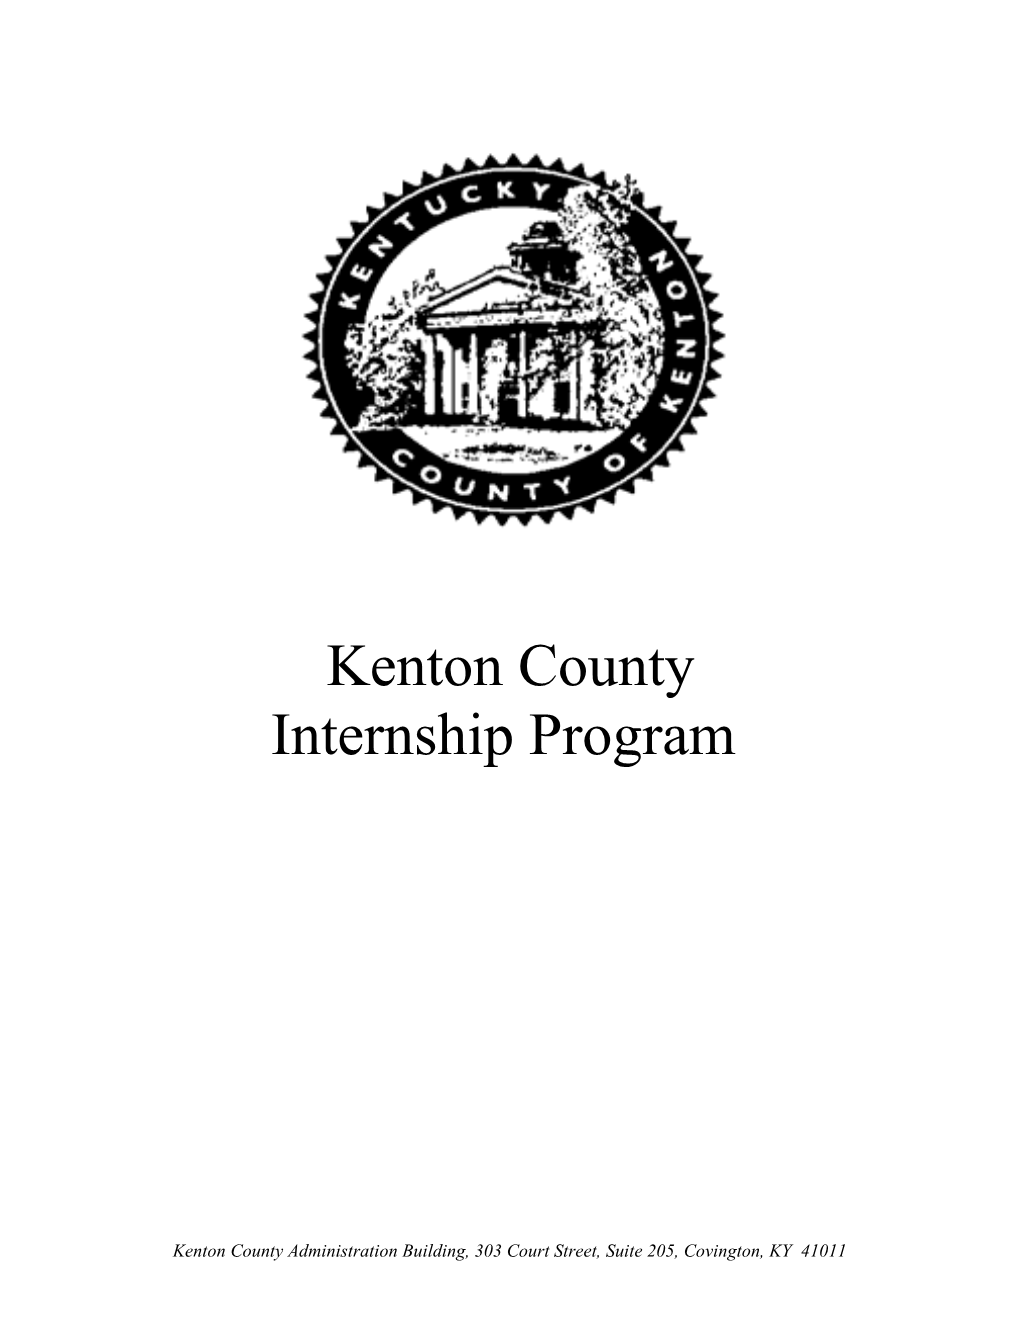 Kenton Countyinternship Program